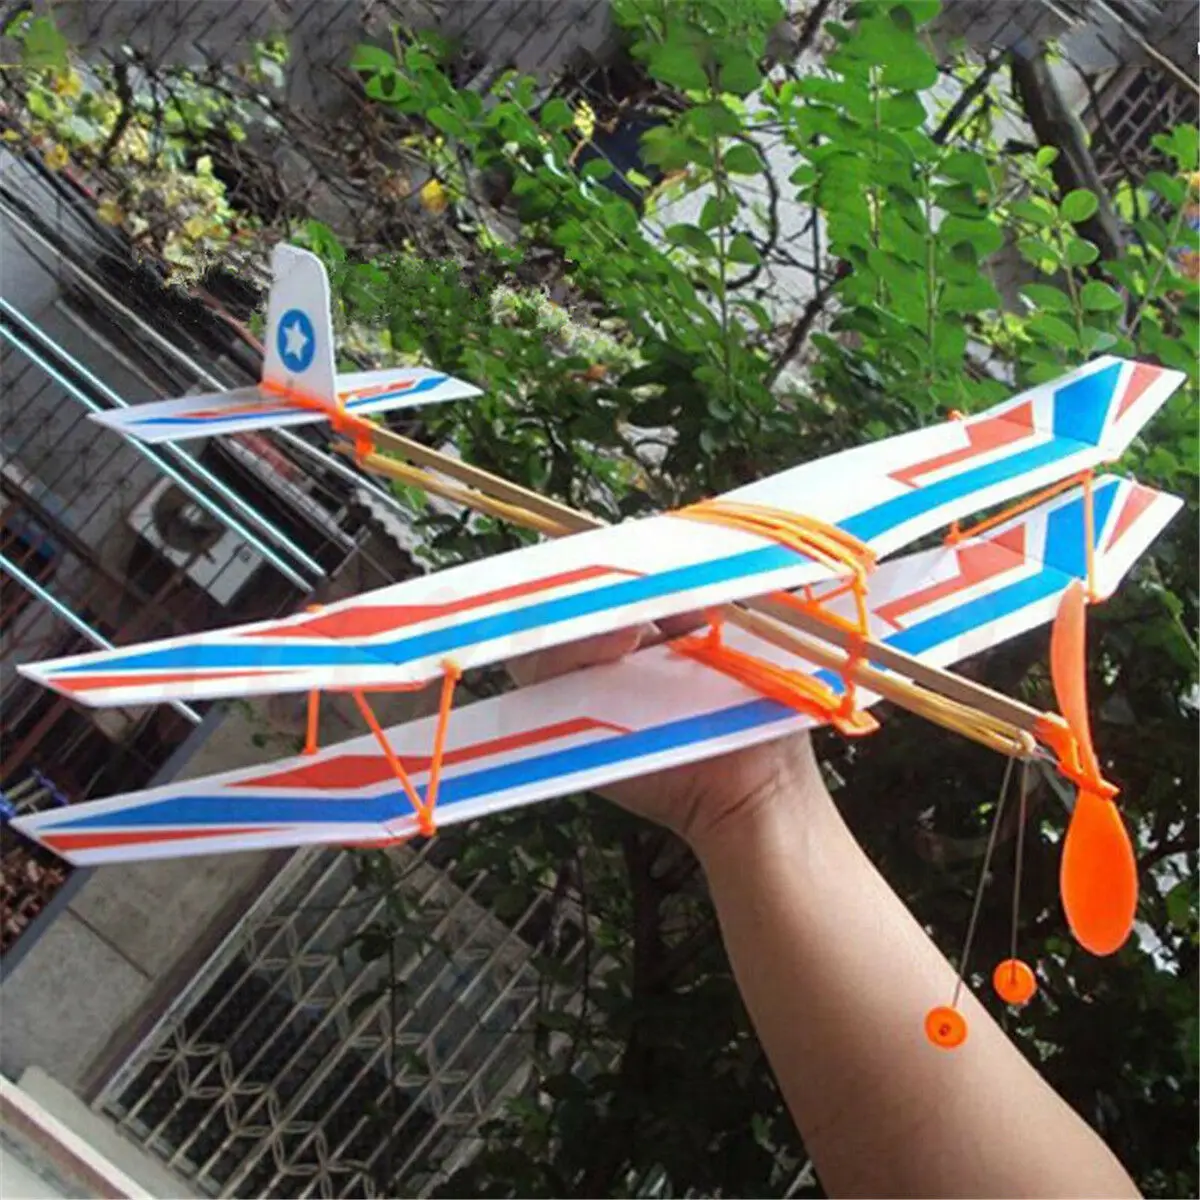 DIY Kids Rubber Band Elastic Powered Flying Plane Model Airplane Fun Toys XS 